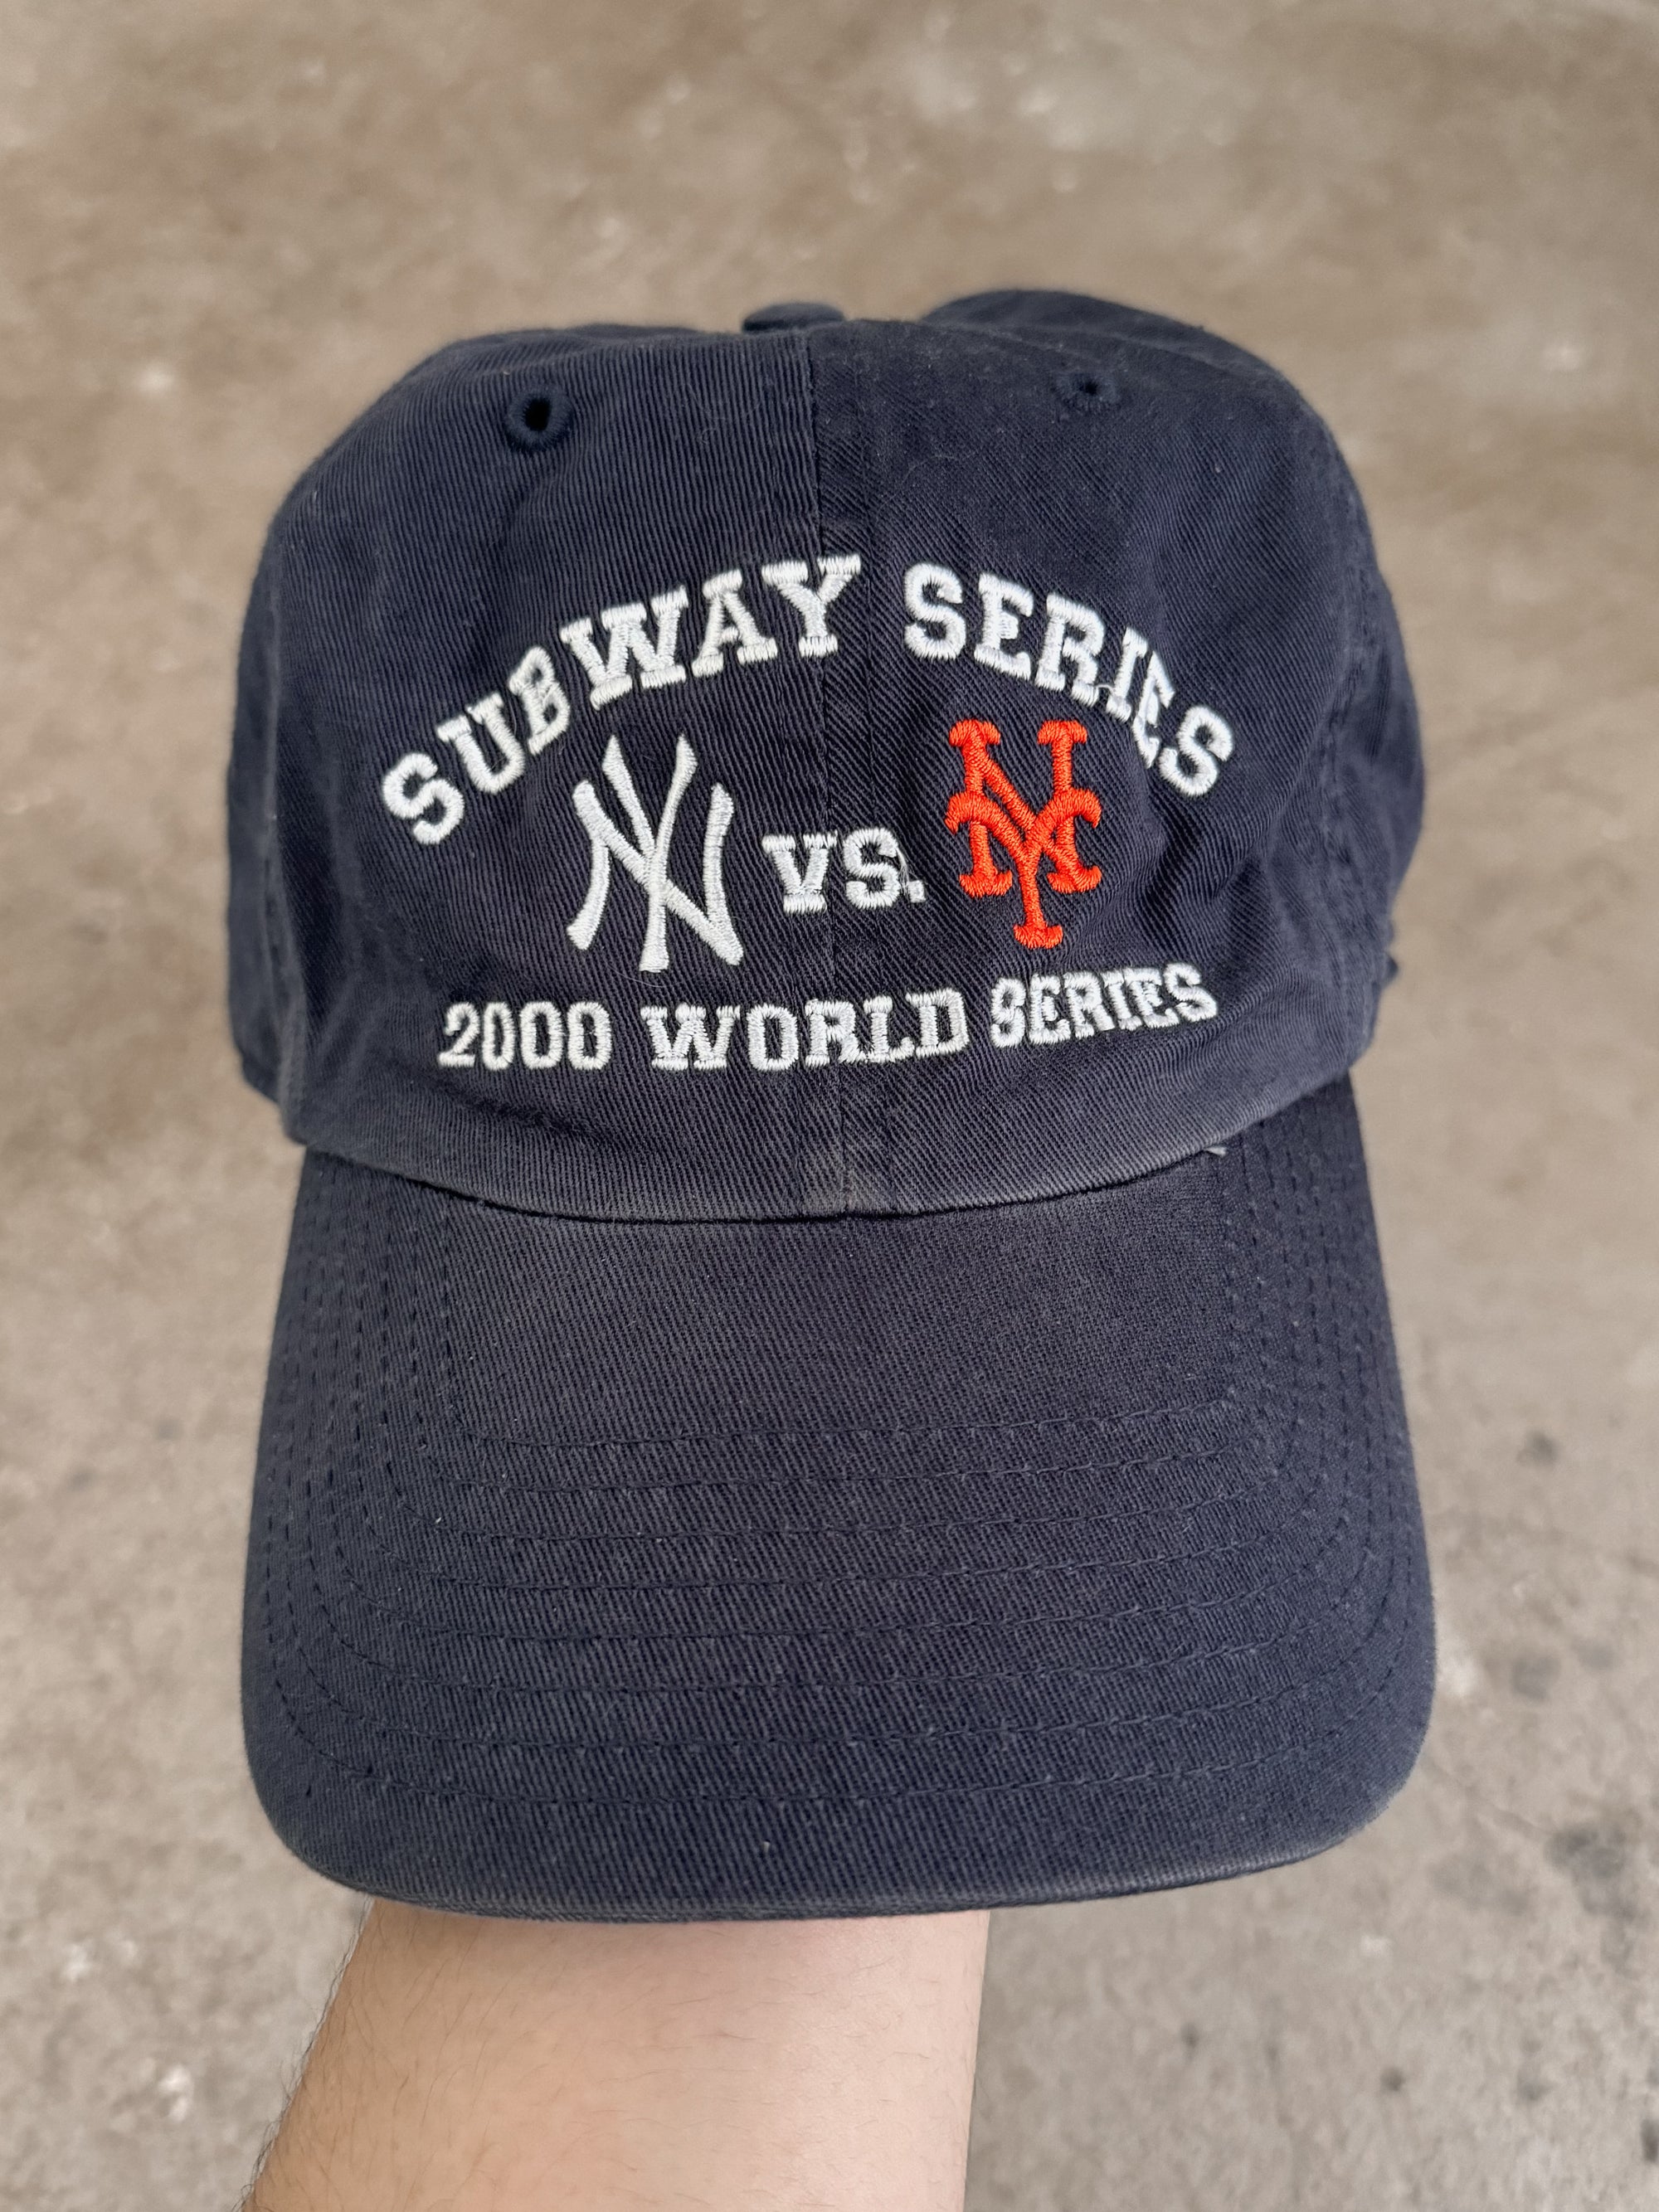 2000 "Subway Series" Hat